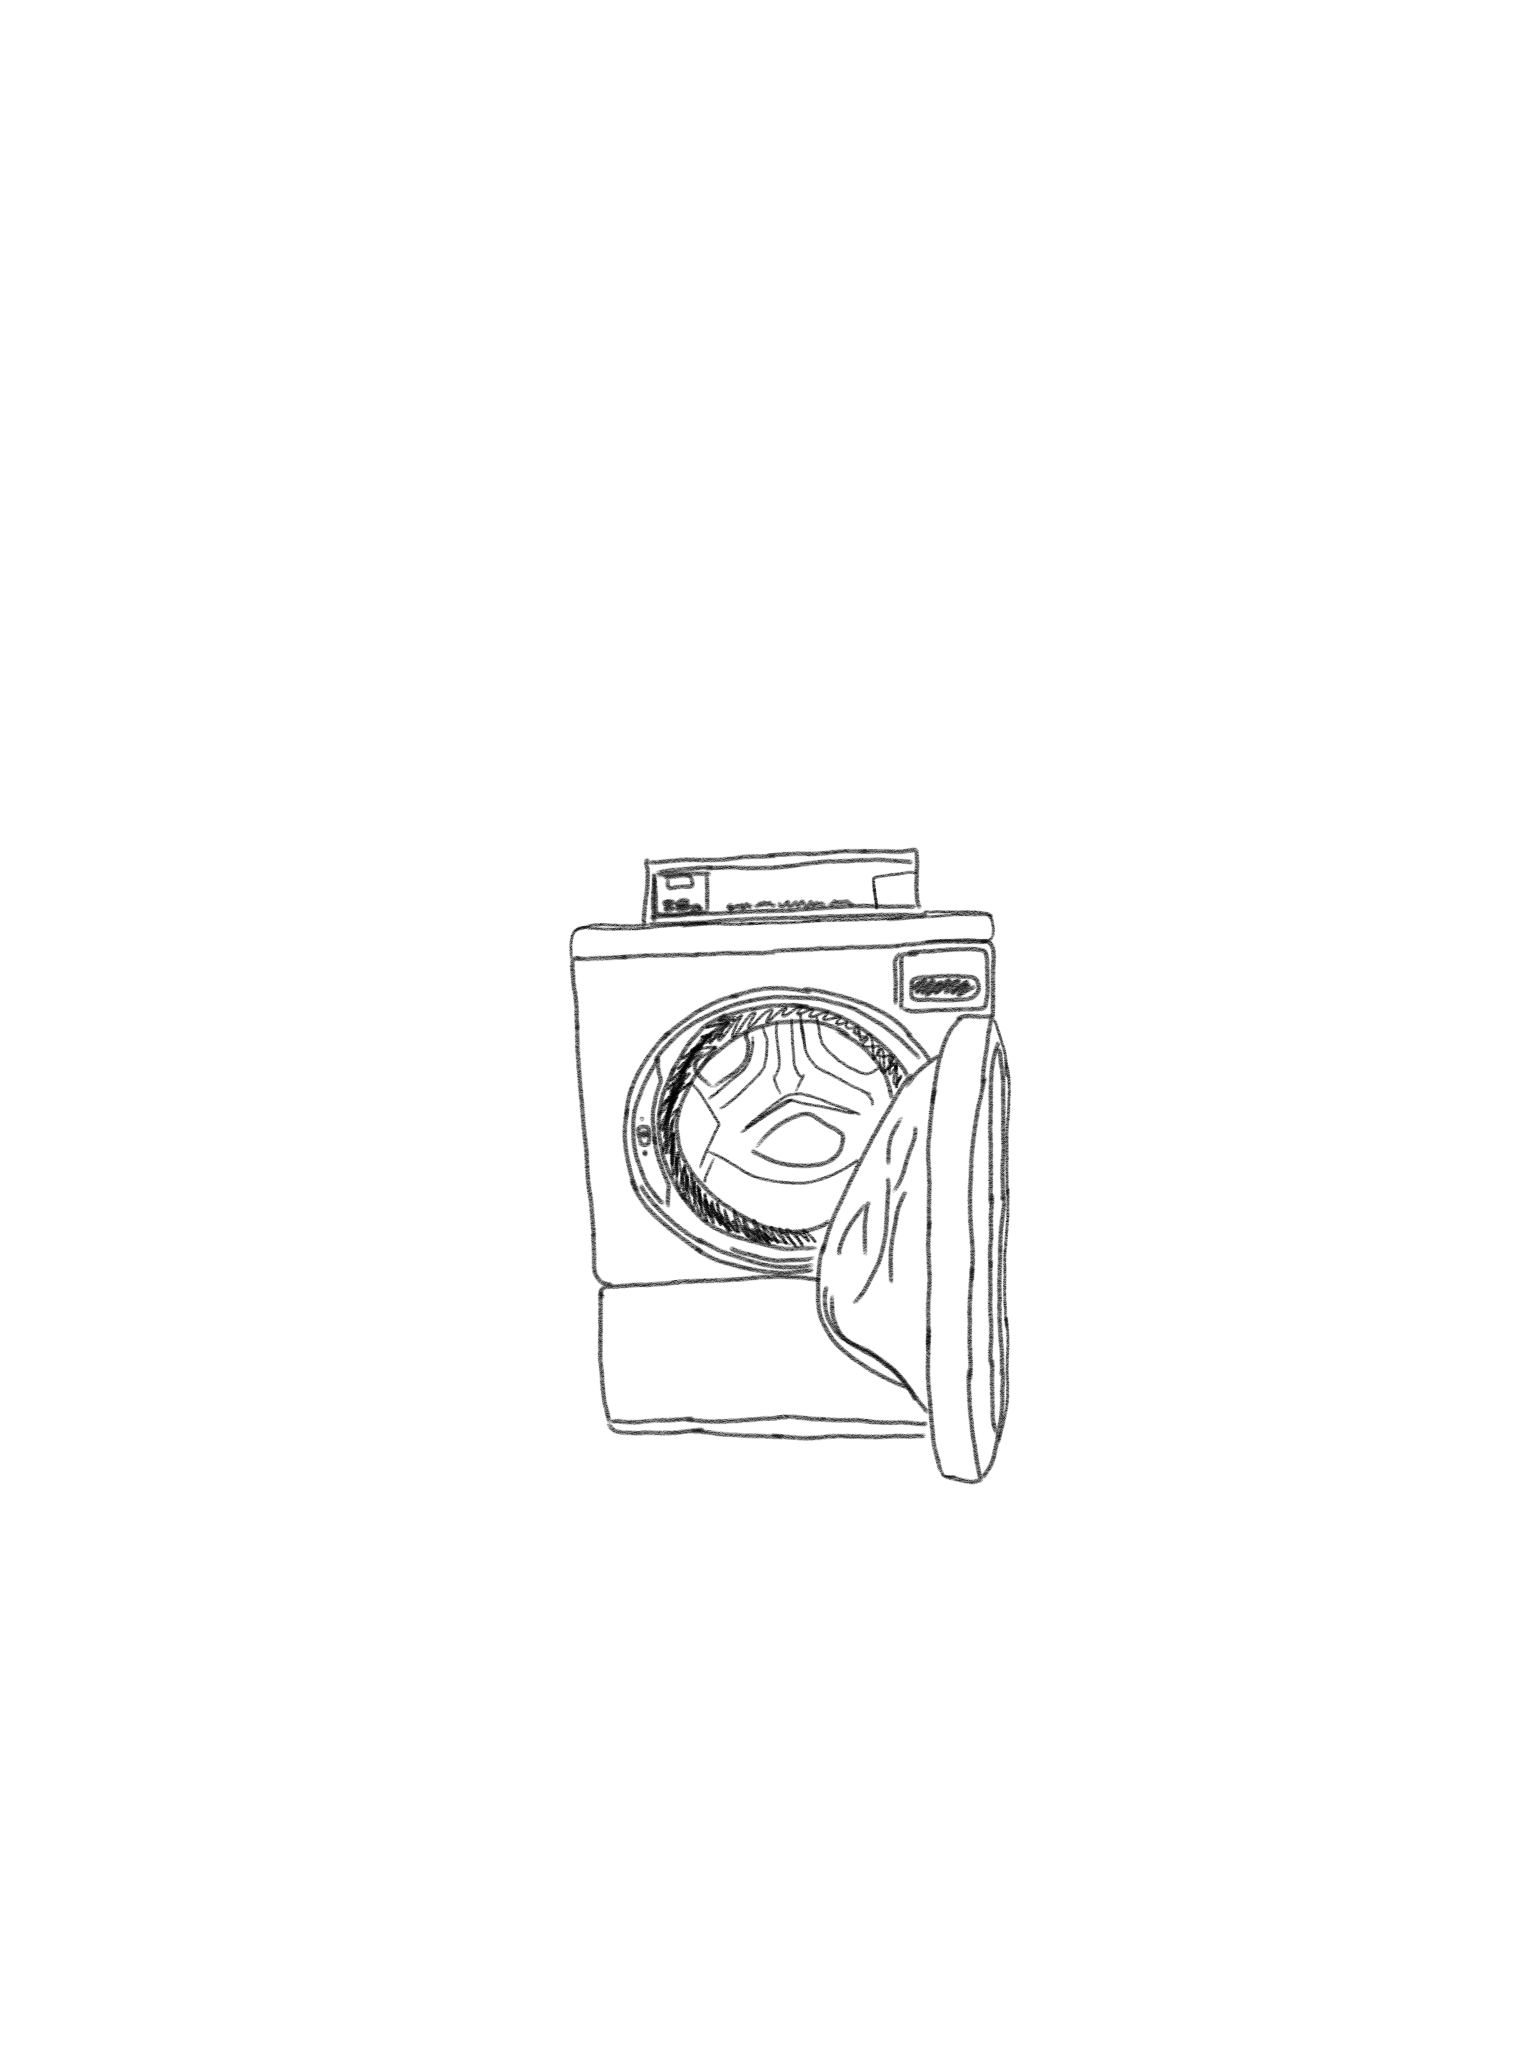 Drawing of a washing machine